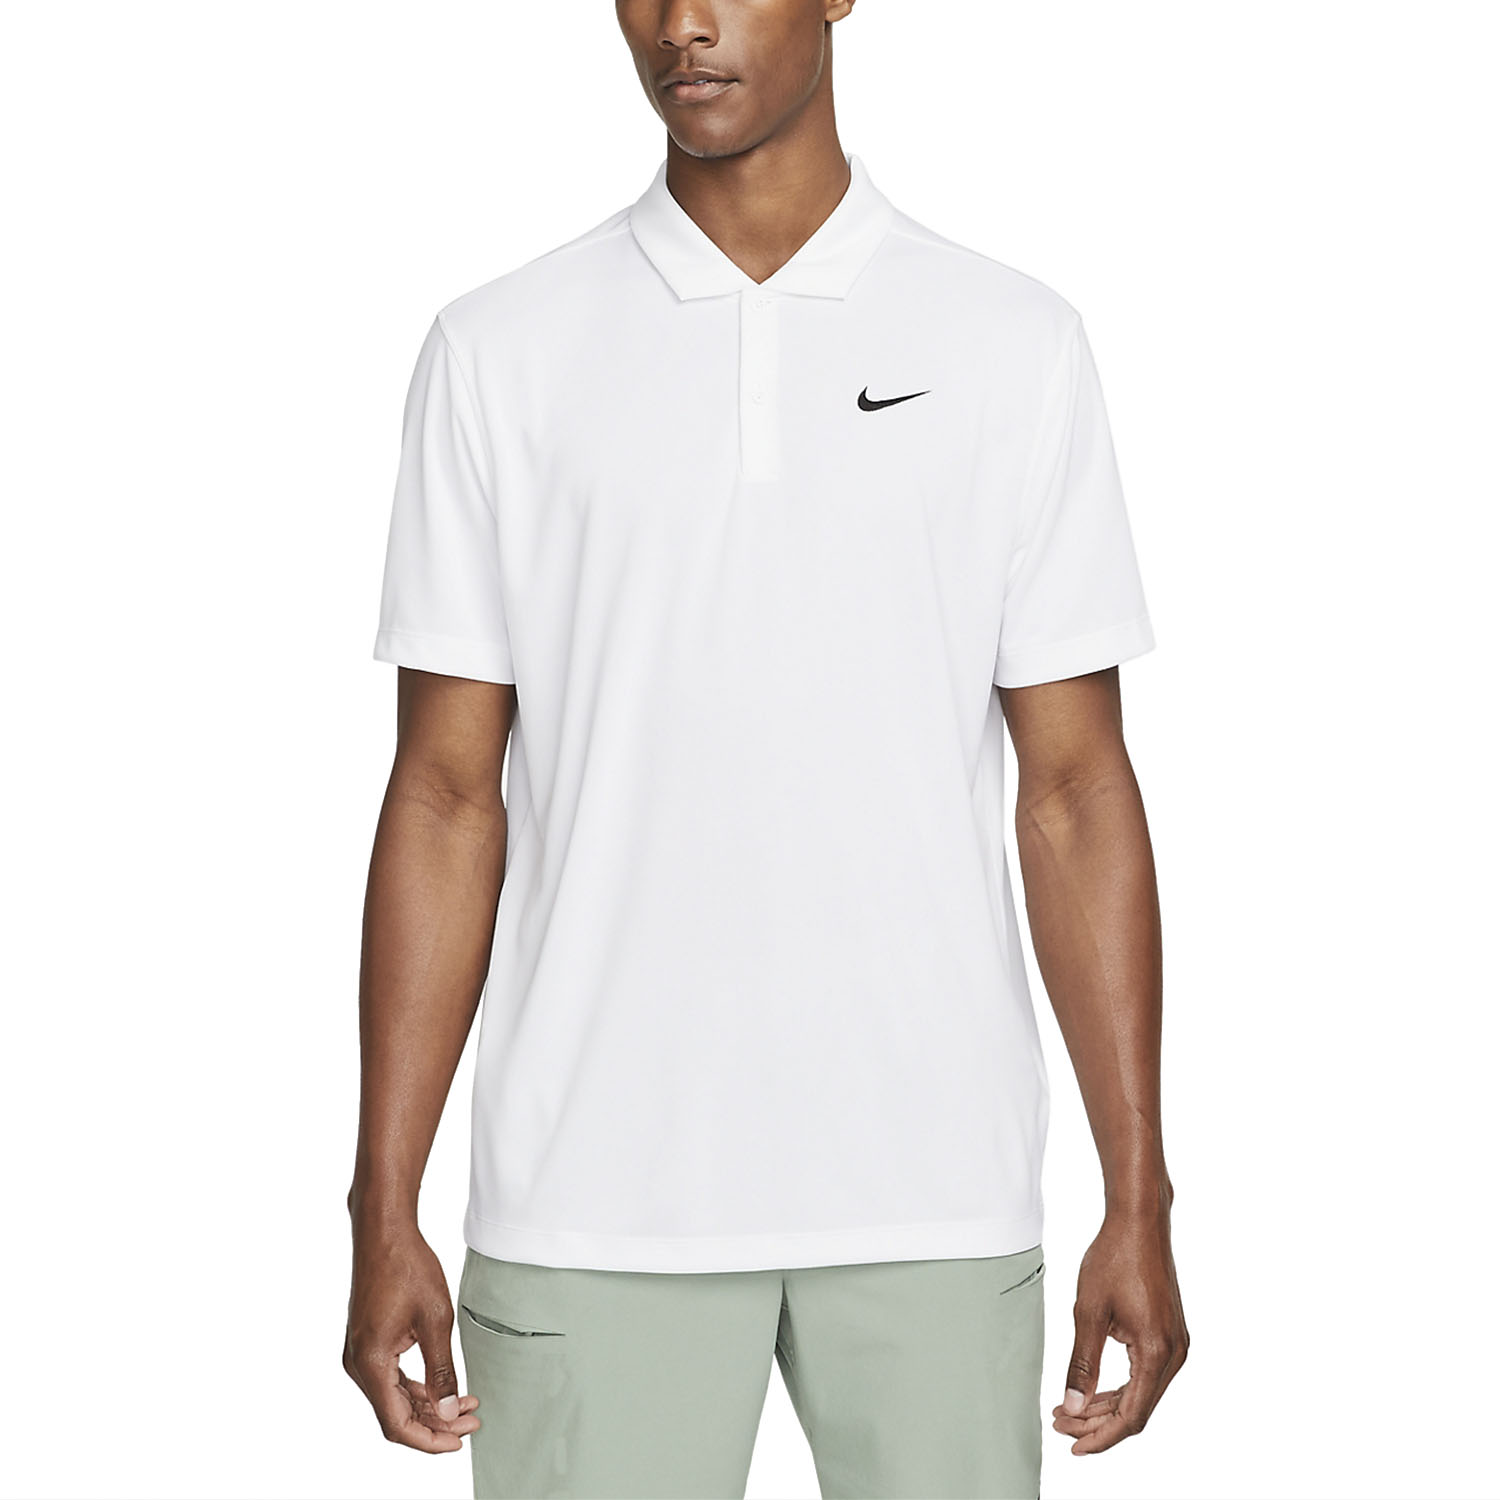 Nike Dri-FIT Solid Logo Men's Tennis Polo - Black/White